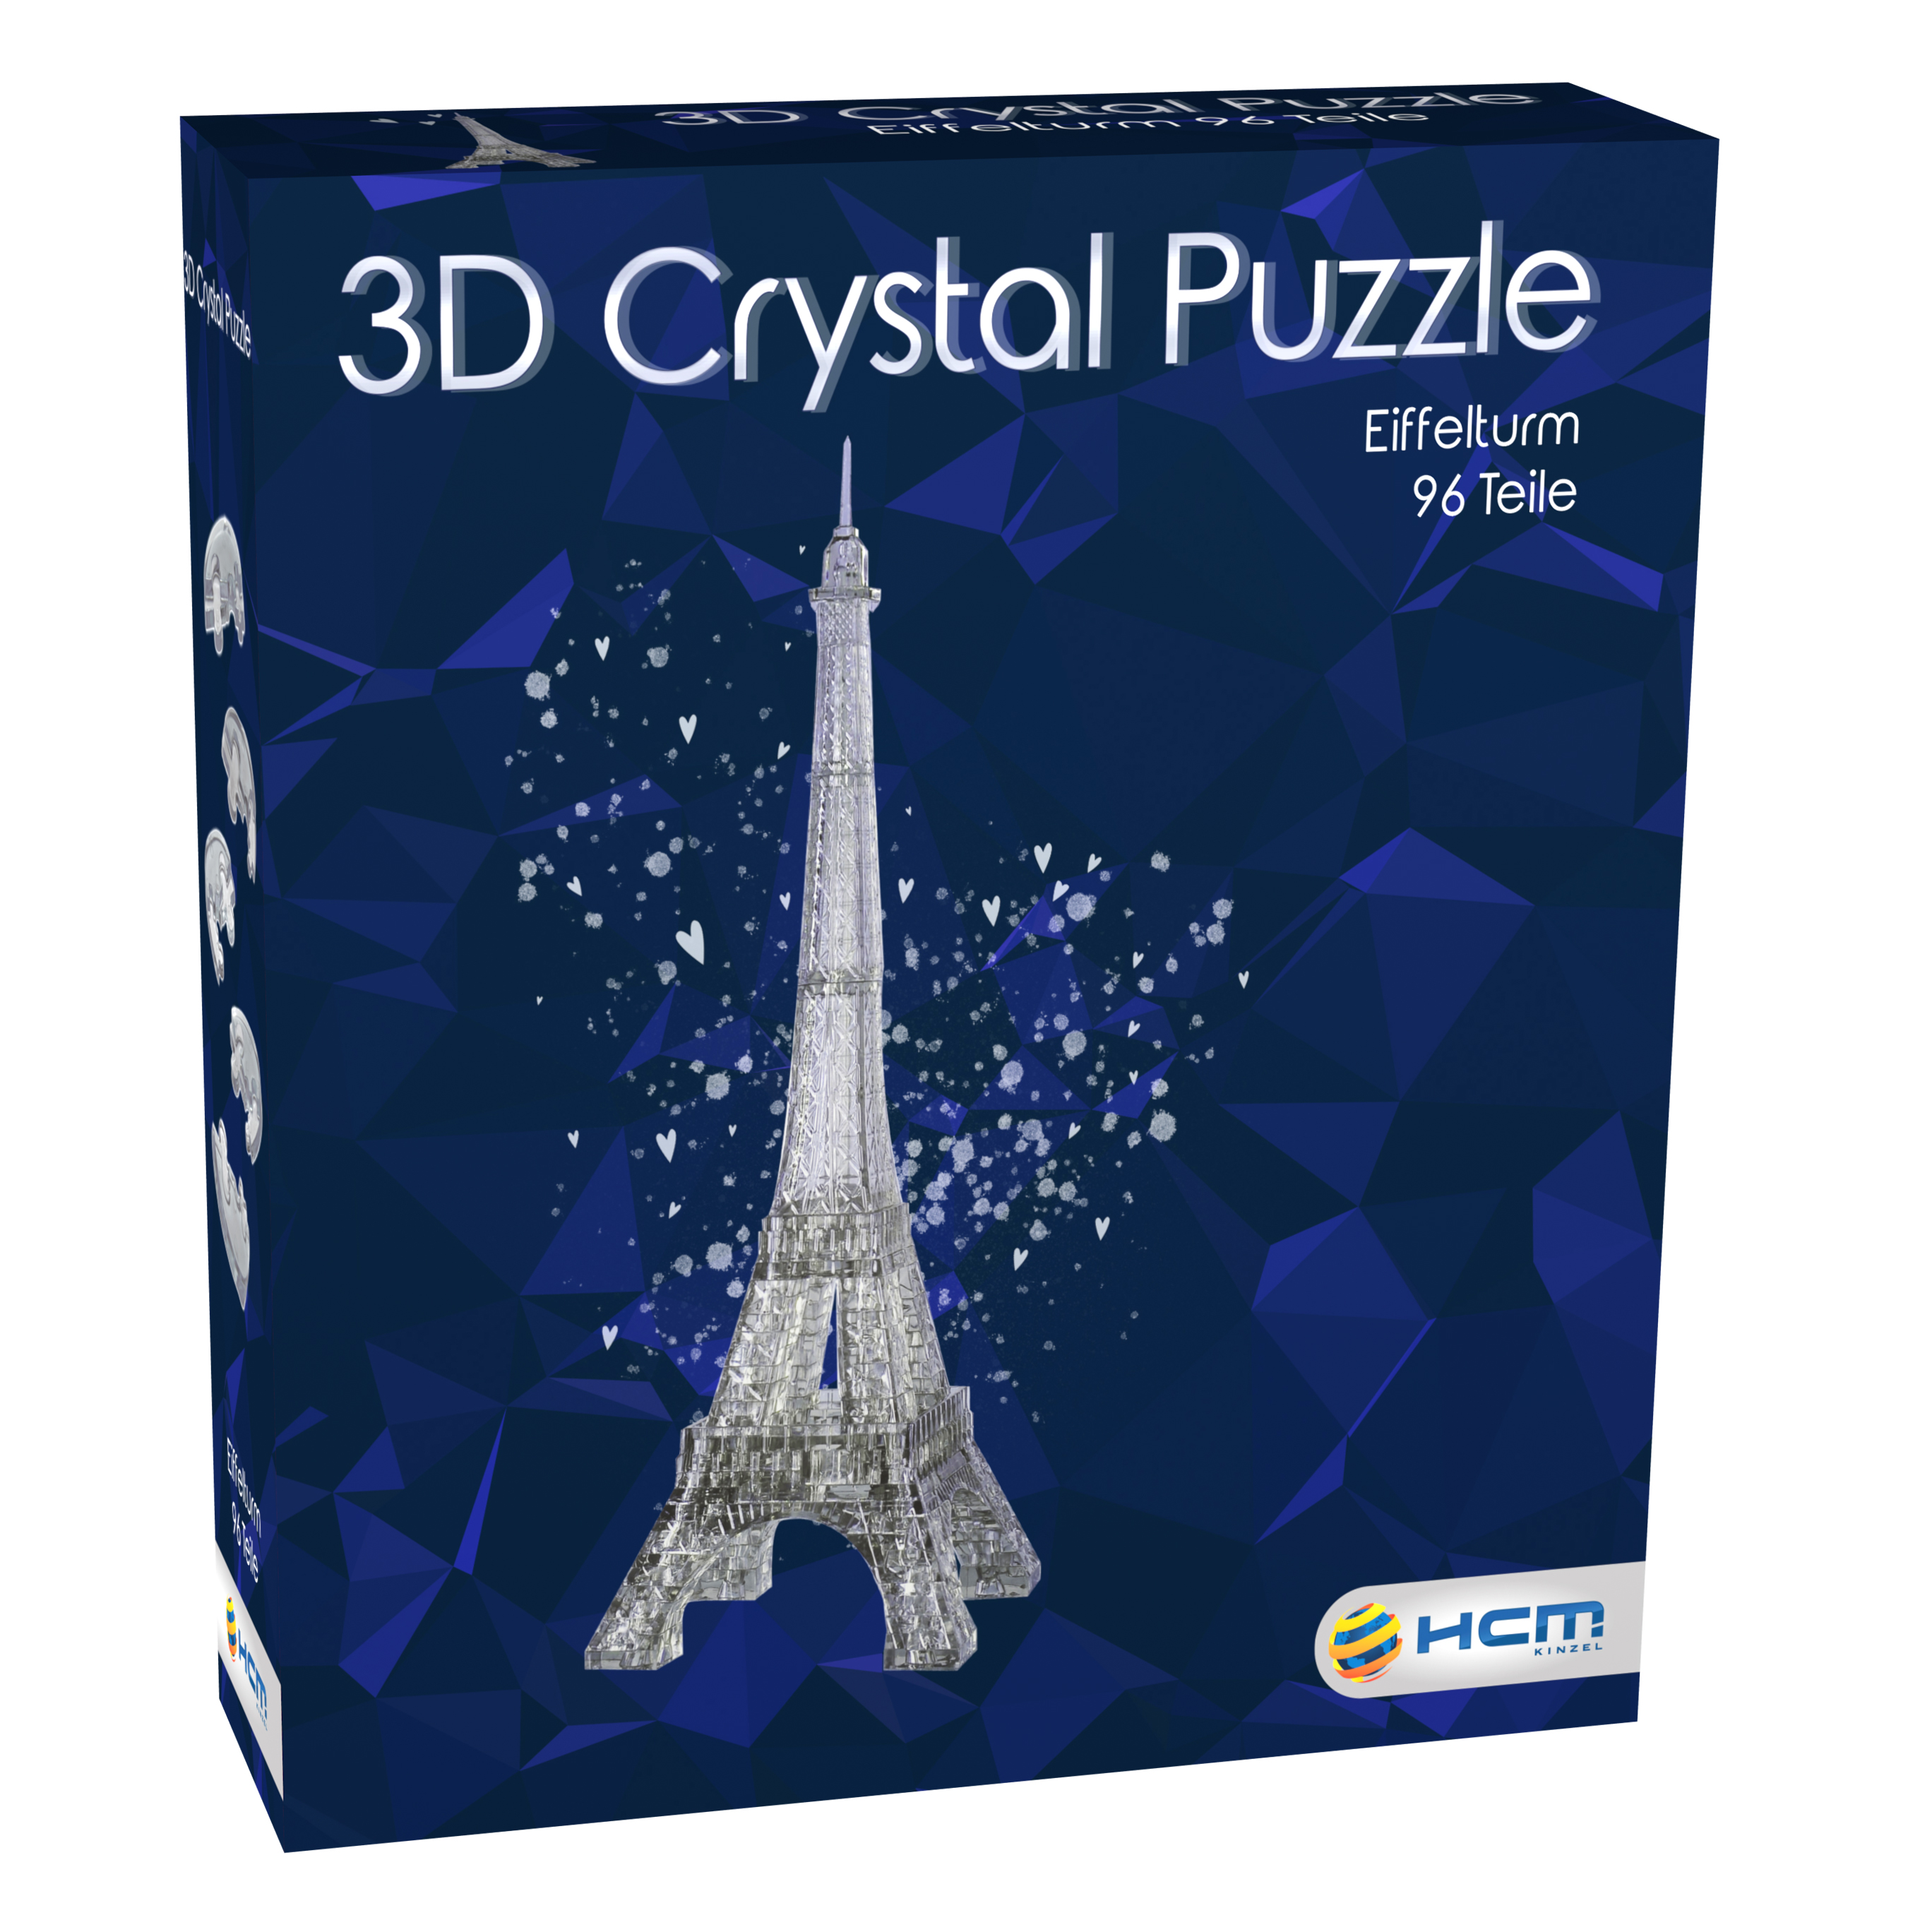 3D Crystal Puzzle Eiffelturm 96 Teile 